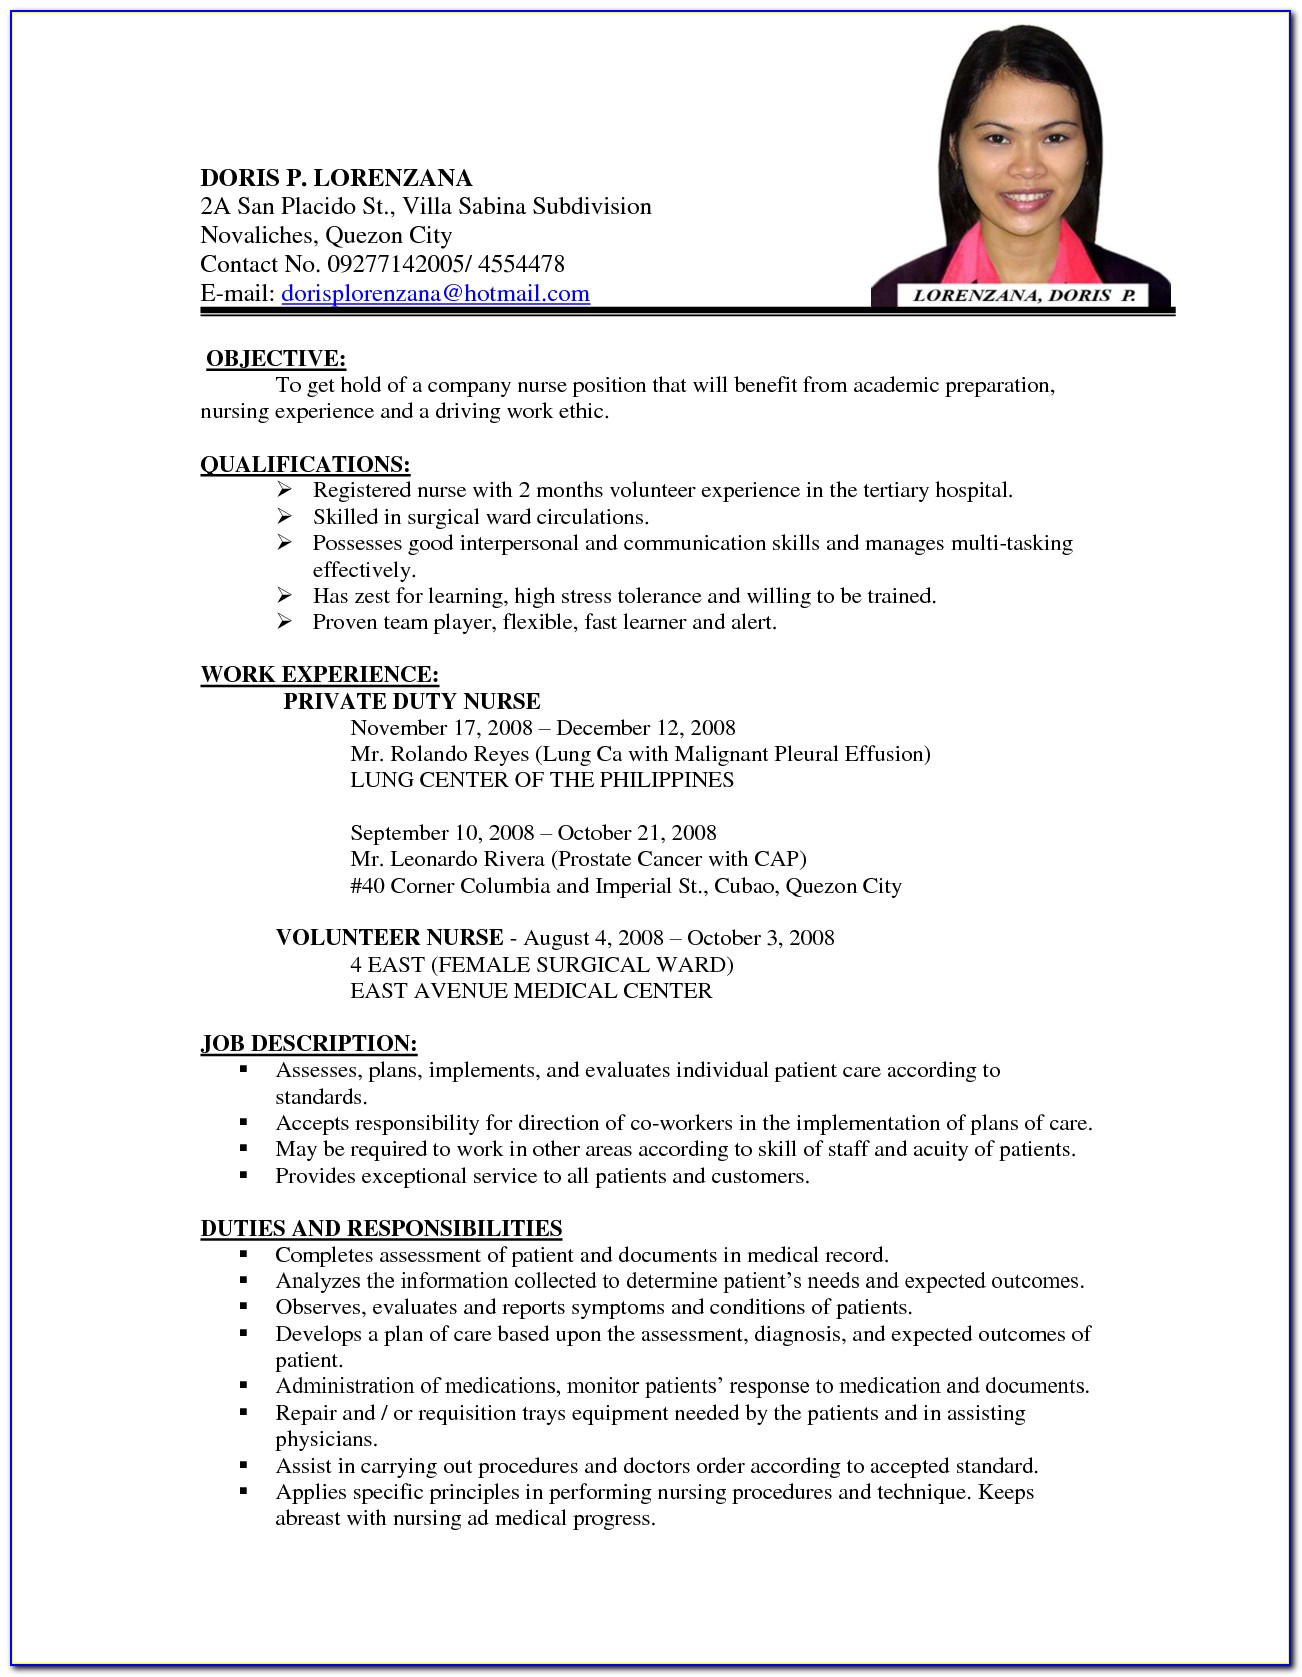 Resume Format For Nurses Free Download